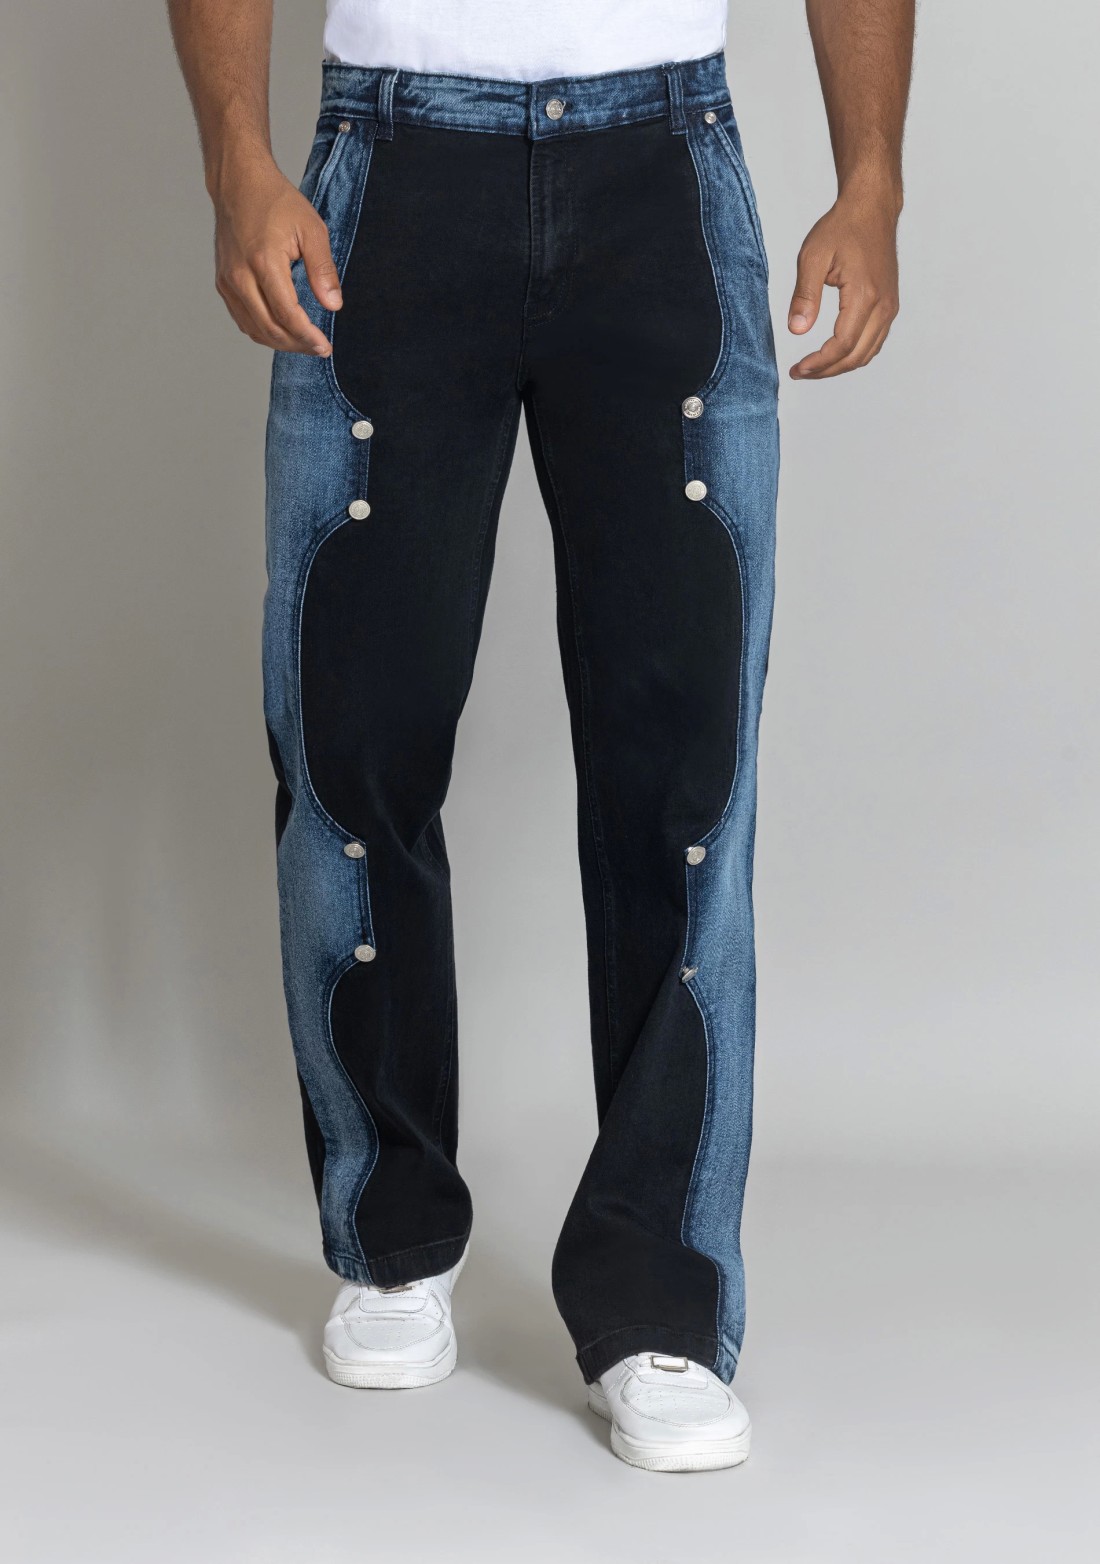 Blue and Black Two Tone Wide Leg Men's Fashion Jeans